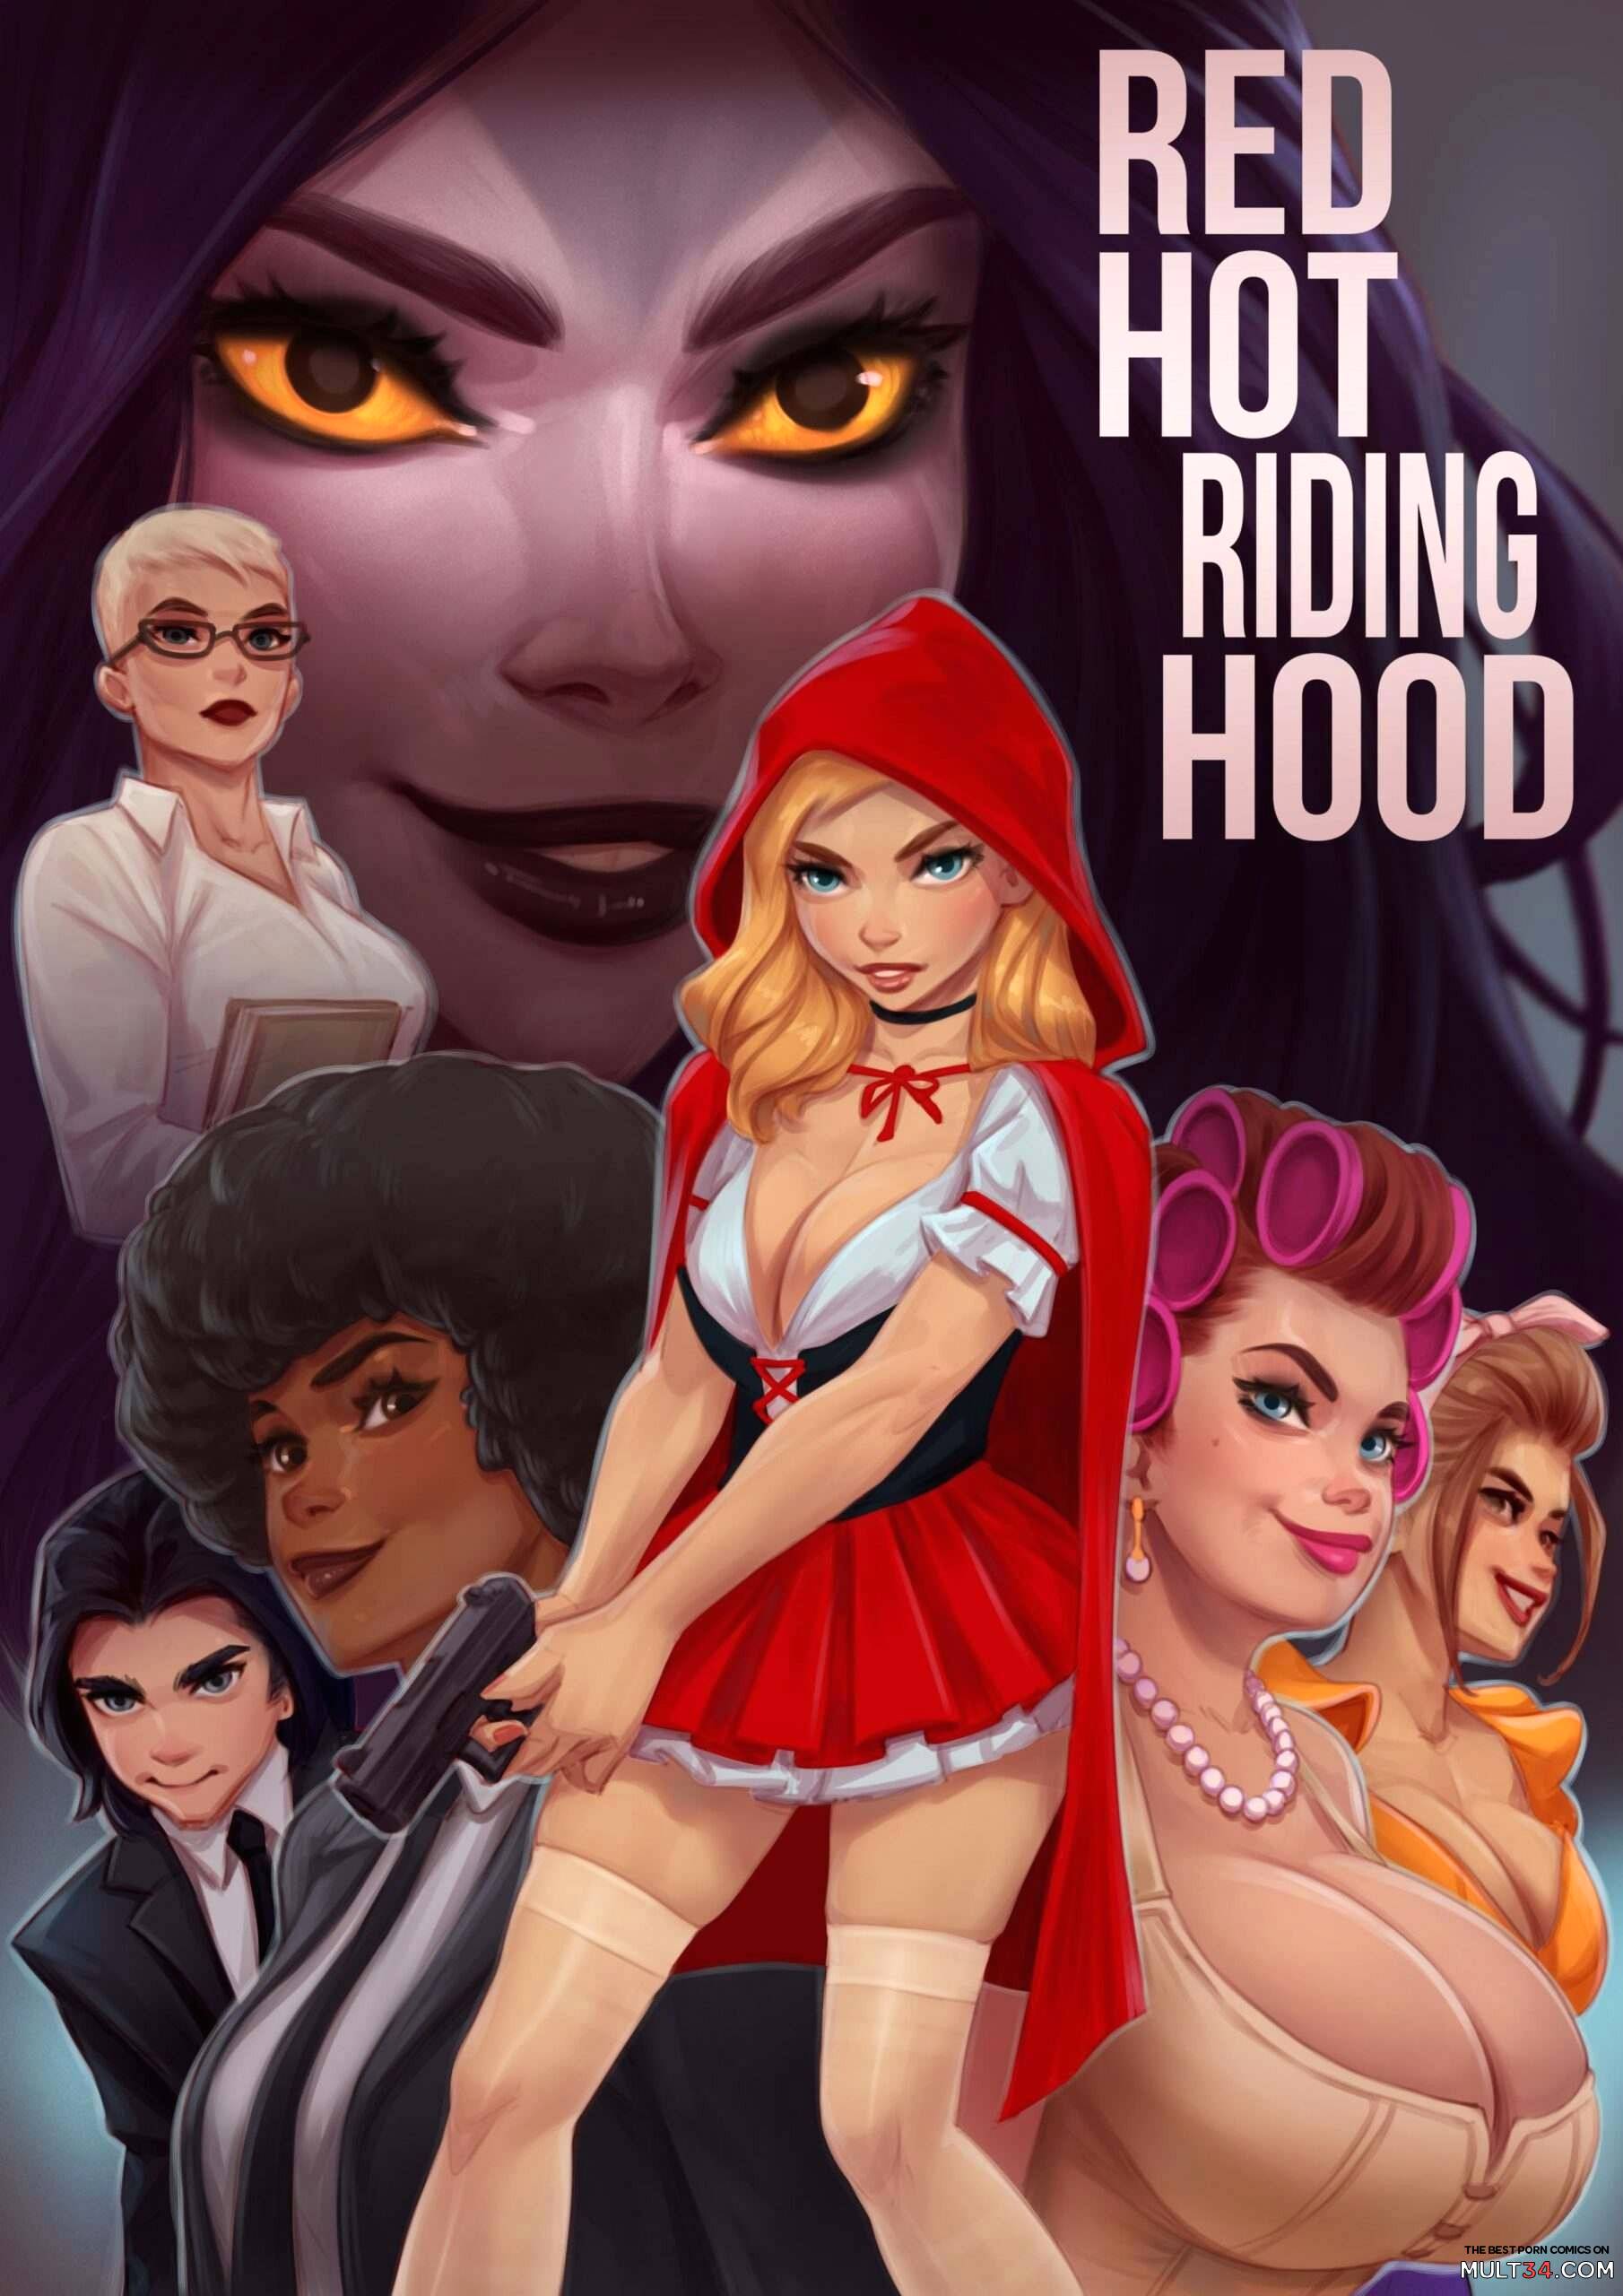 Hot Hood Porn - Red Hot Riding Hood porn comic - the best cartoon porn comics, Rule 34 |  MULT34